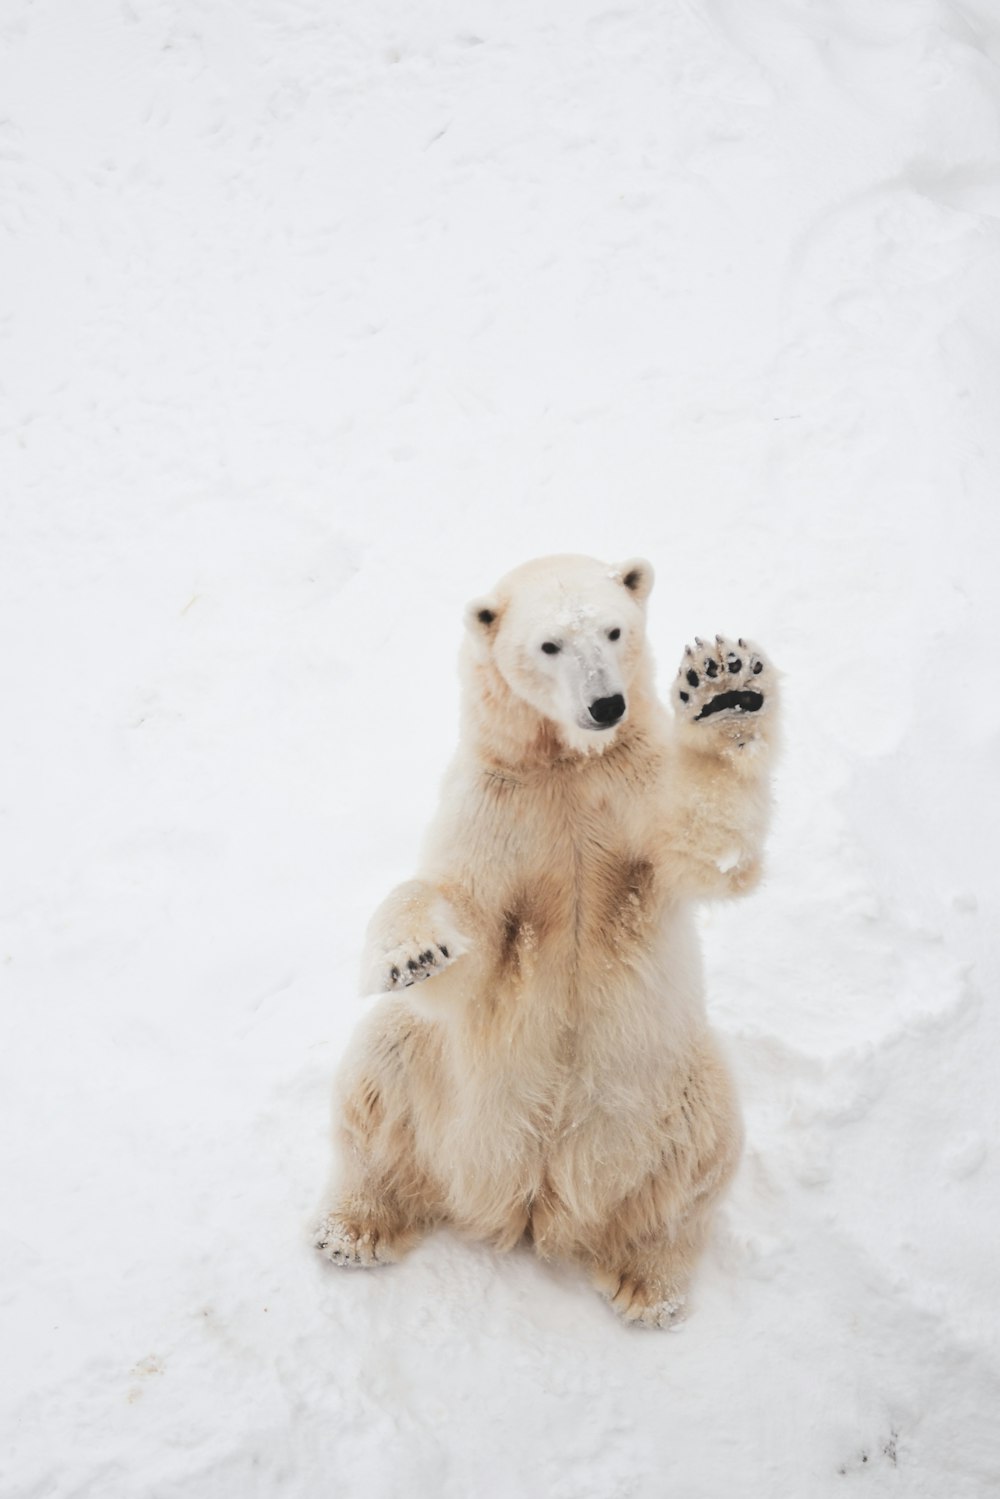 350+ Polar Bear Pictures | Download Free Images on Unsplash